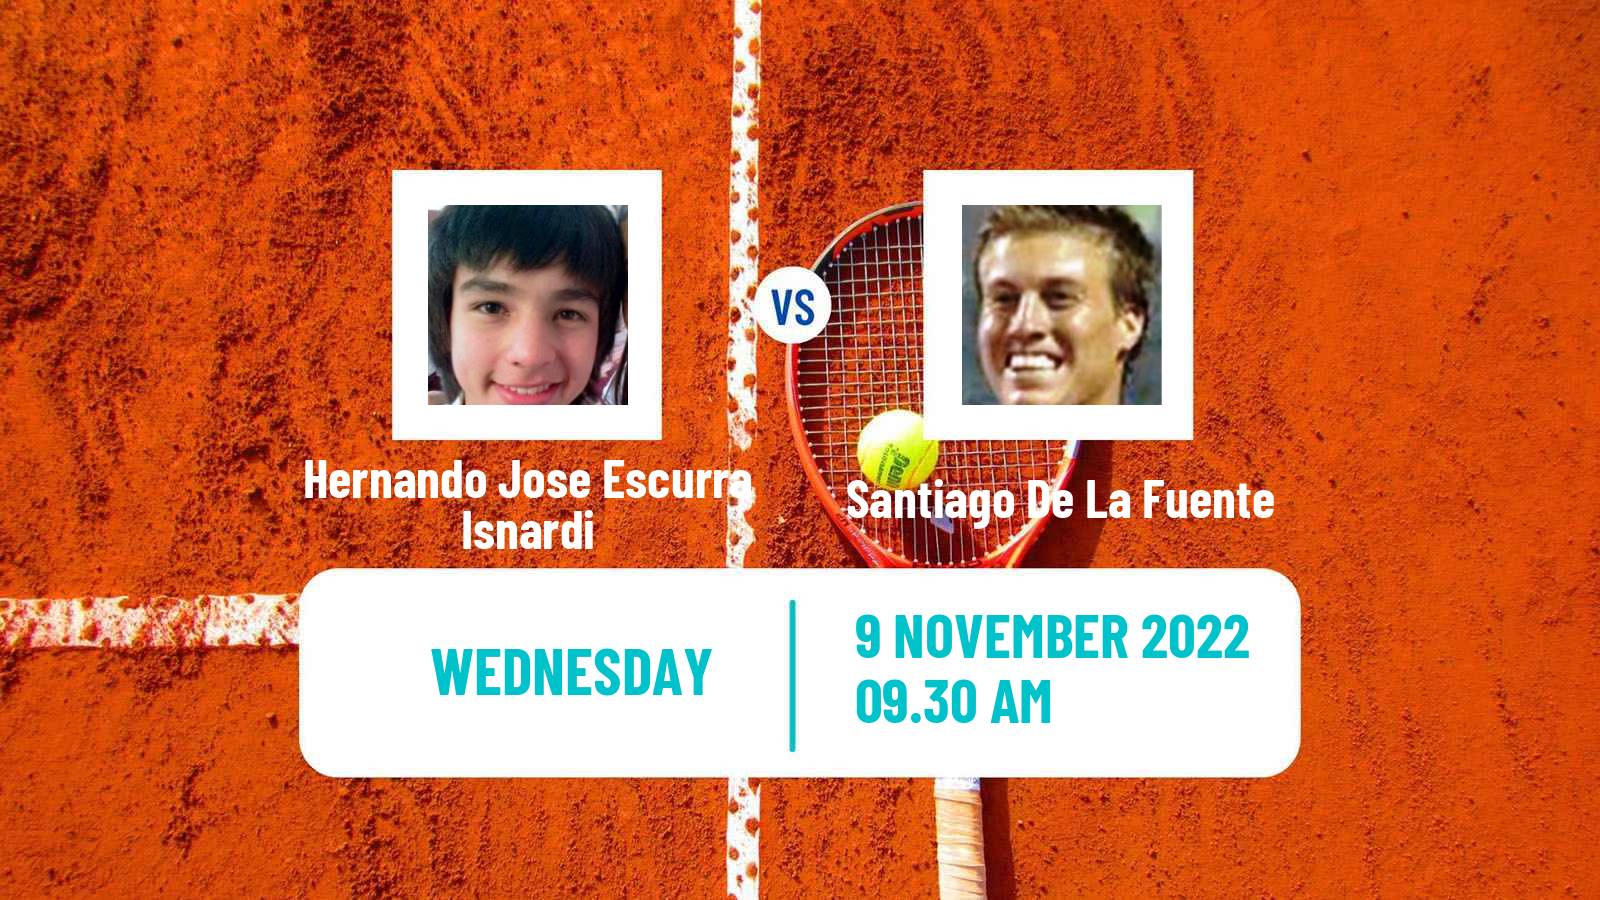 Tennis ITF Tournaments Hernando Jose Escurra Isnardi - Santiago De La Fuente